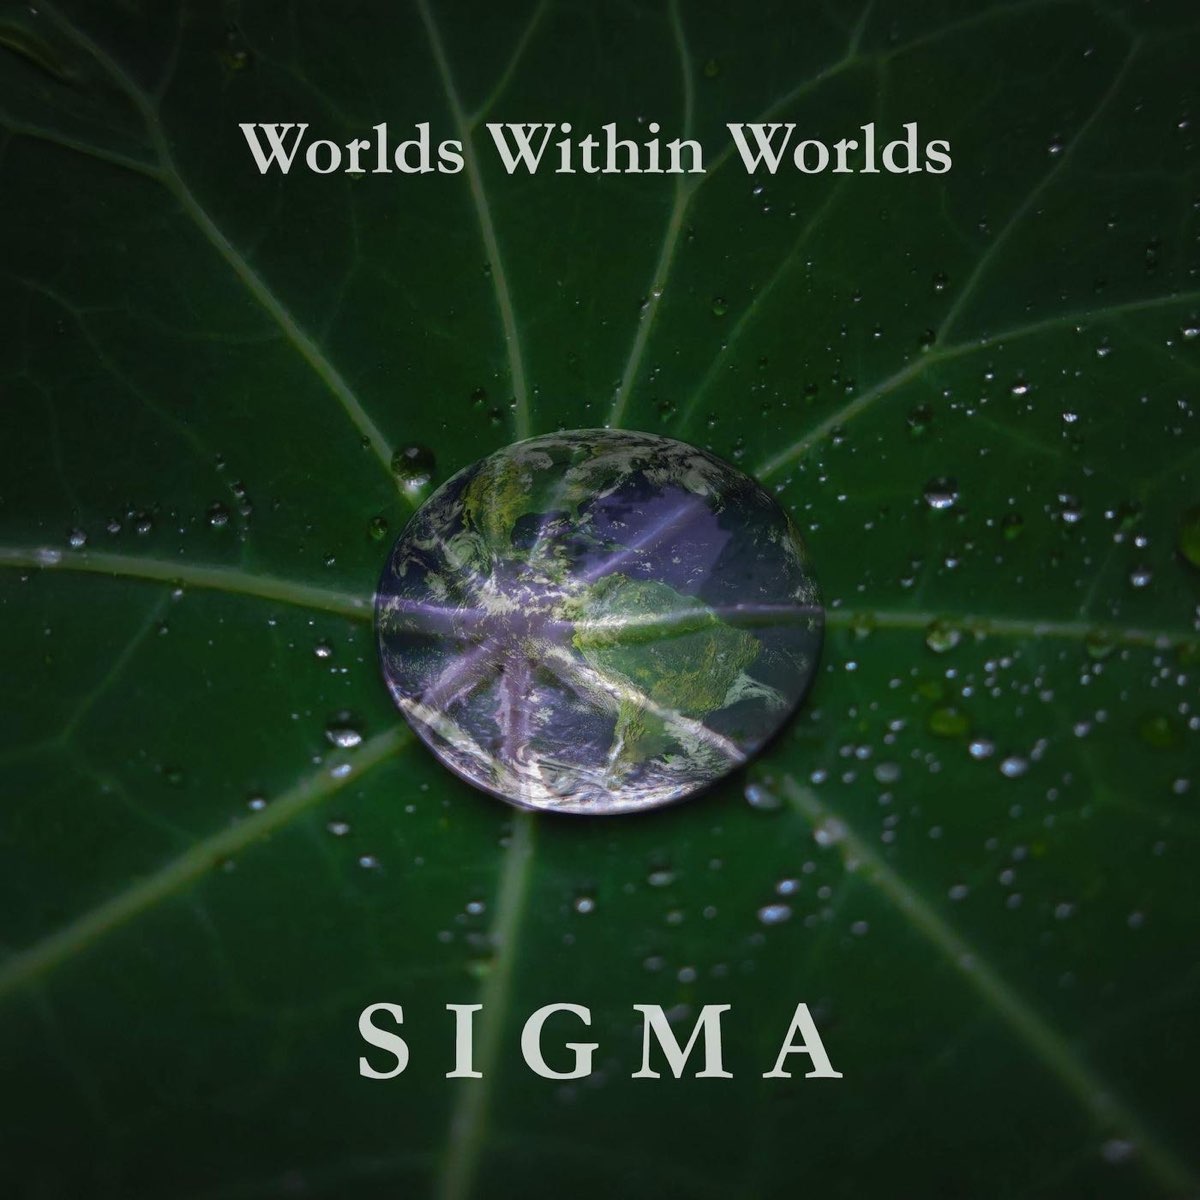 Worlds within Worlds. Sigma Touch. Within the Worlds песня видео. Сигма слушает музыку. Бай бай сигма песня